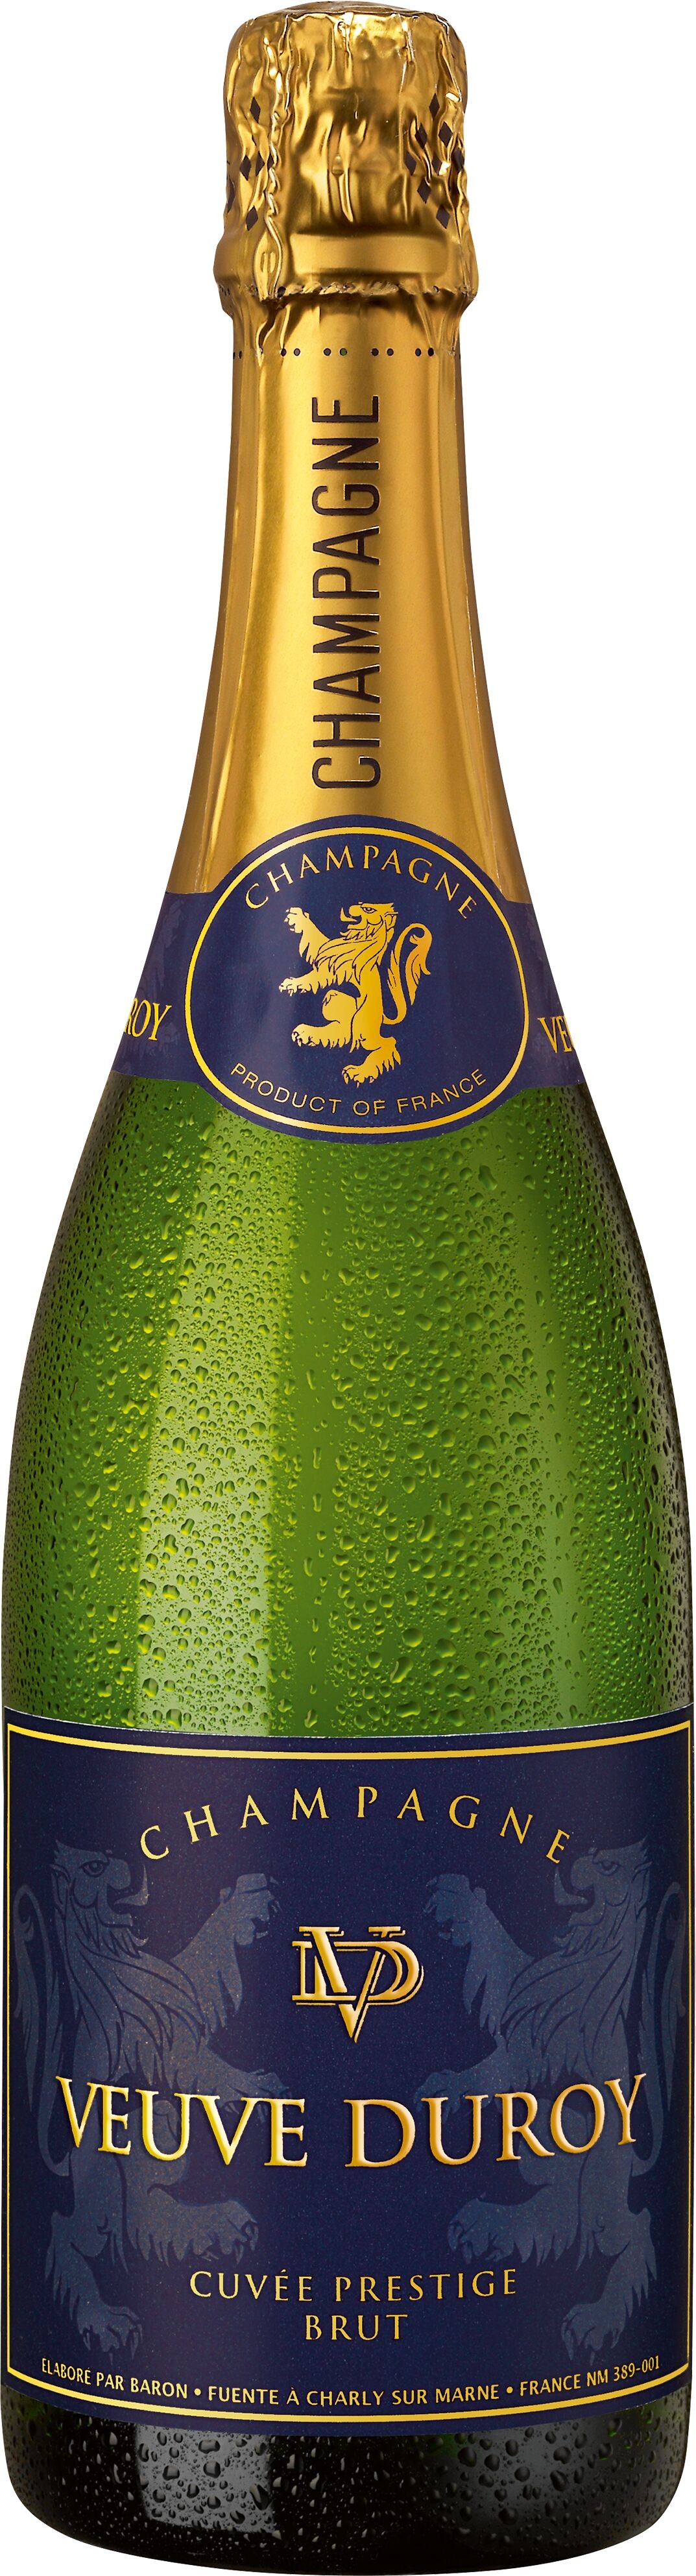 Champagne Cuvee Prestige Brut Veuve Duroy Champagne